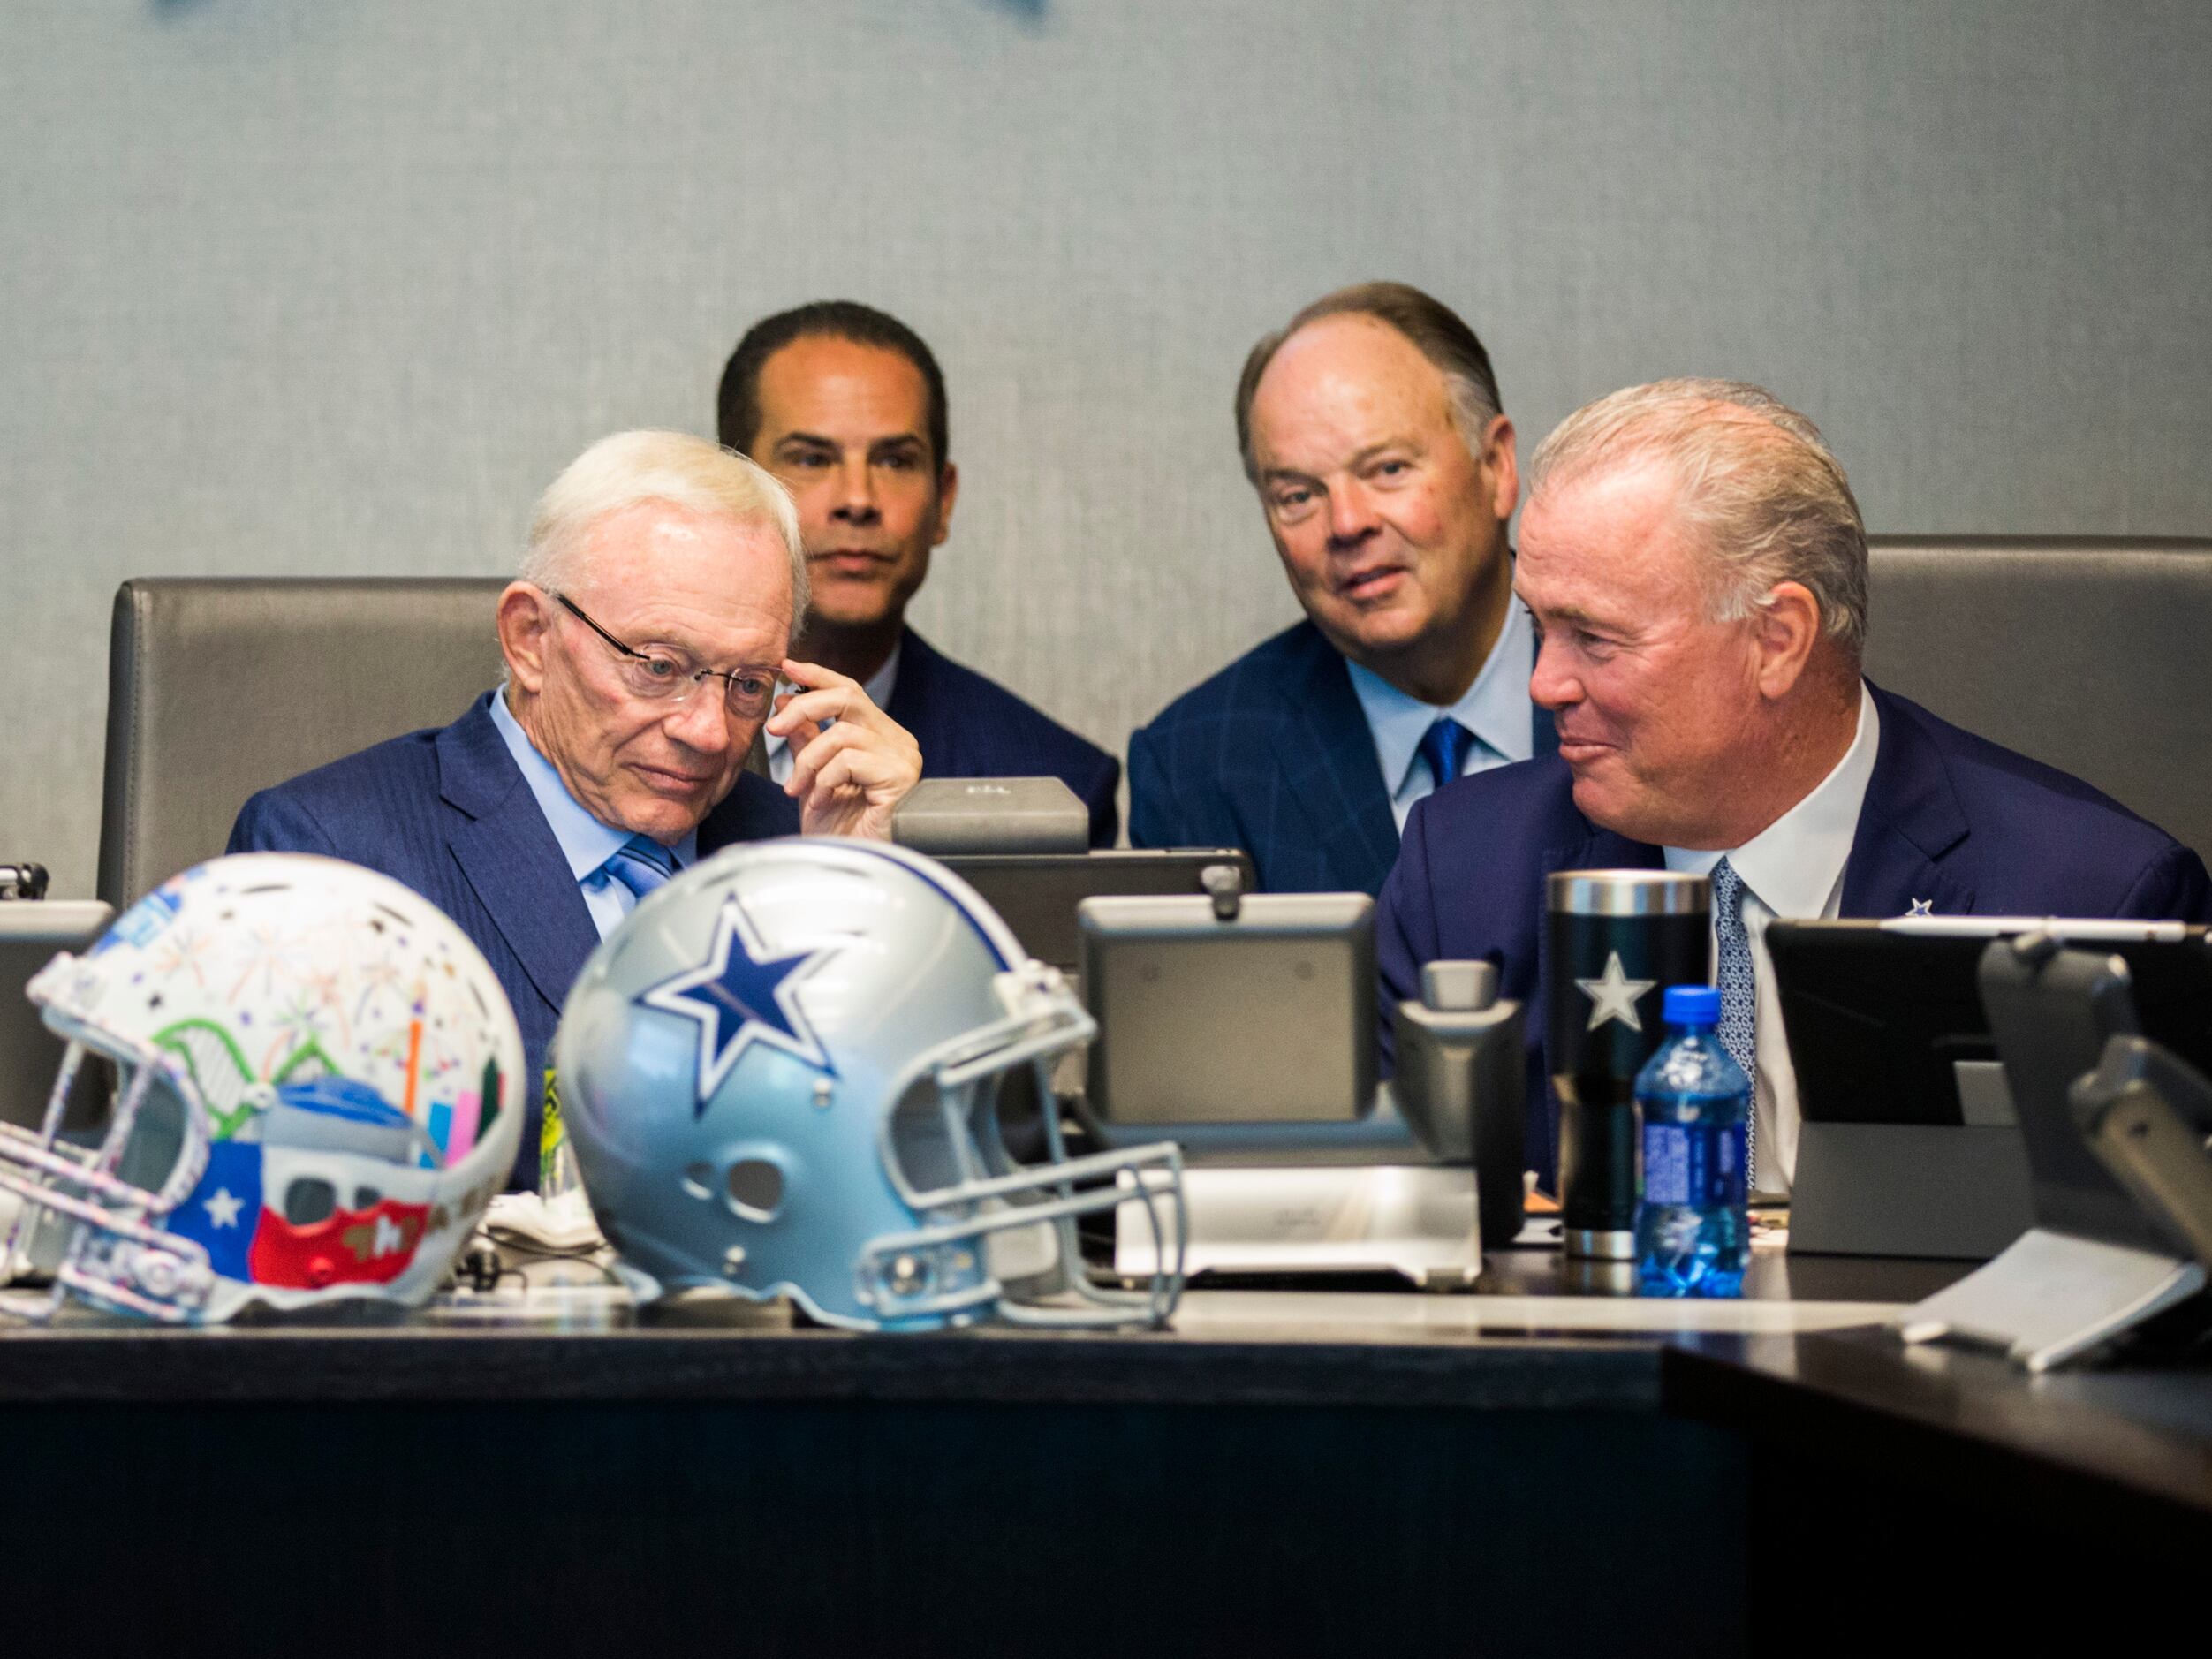 2022 NFL Draft: Treylon Burks Film Session 